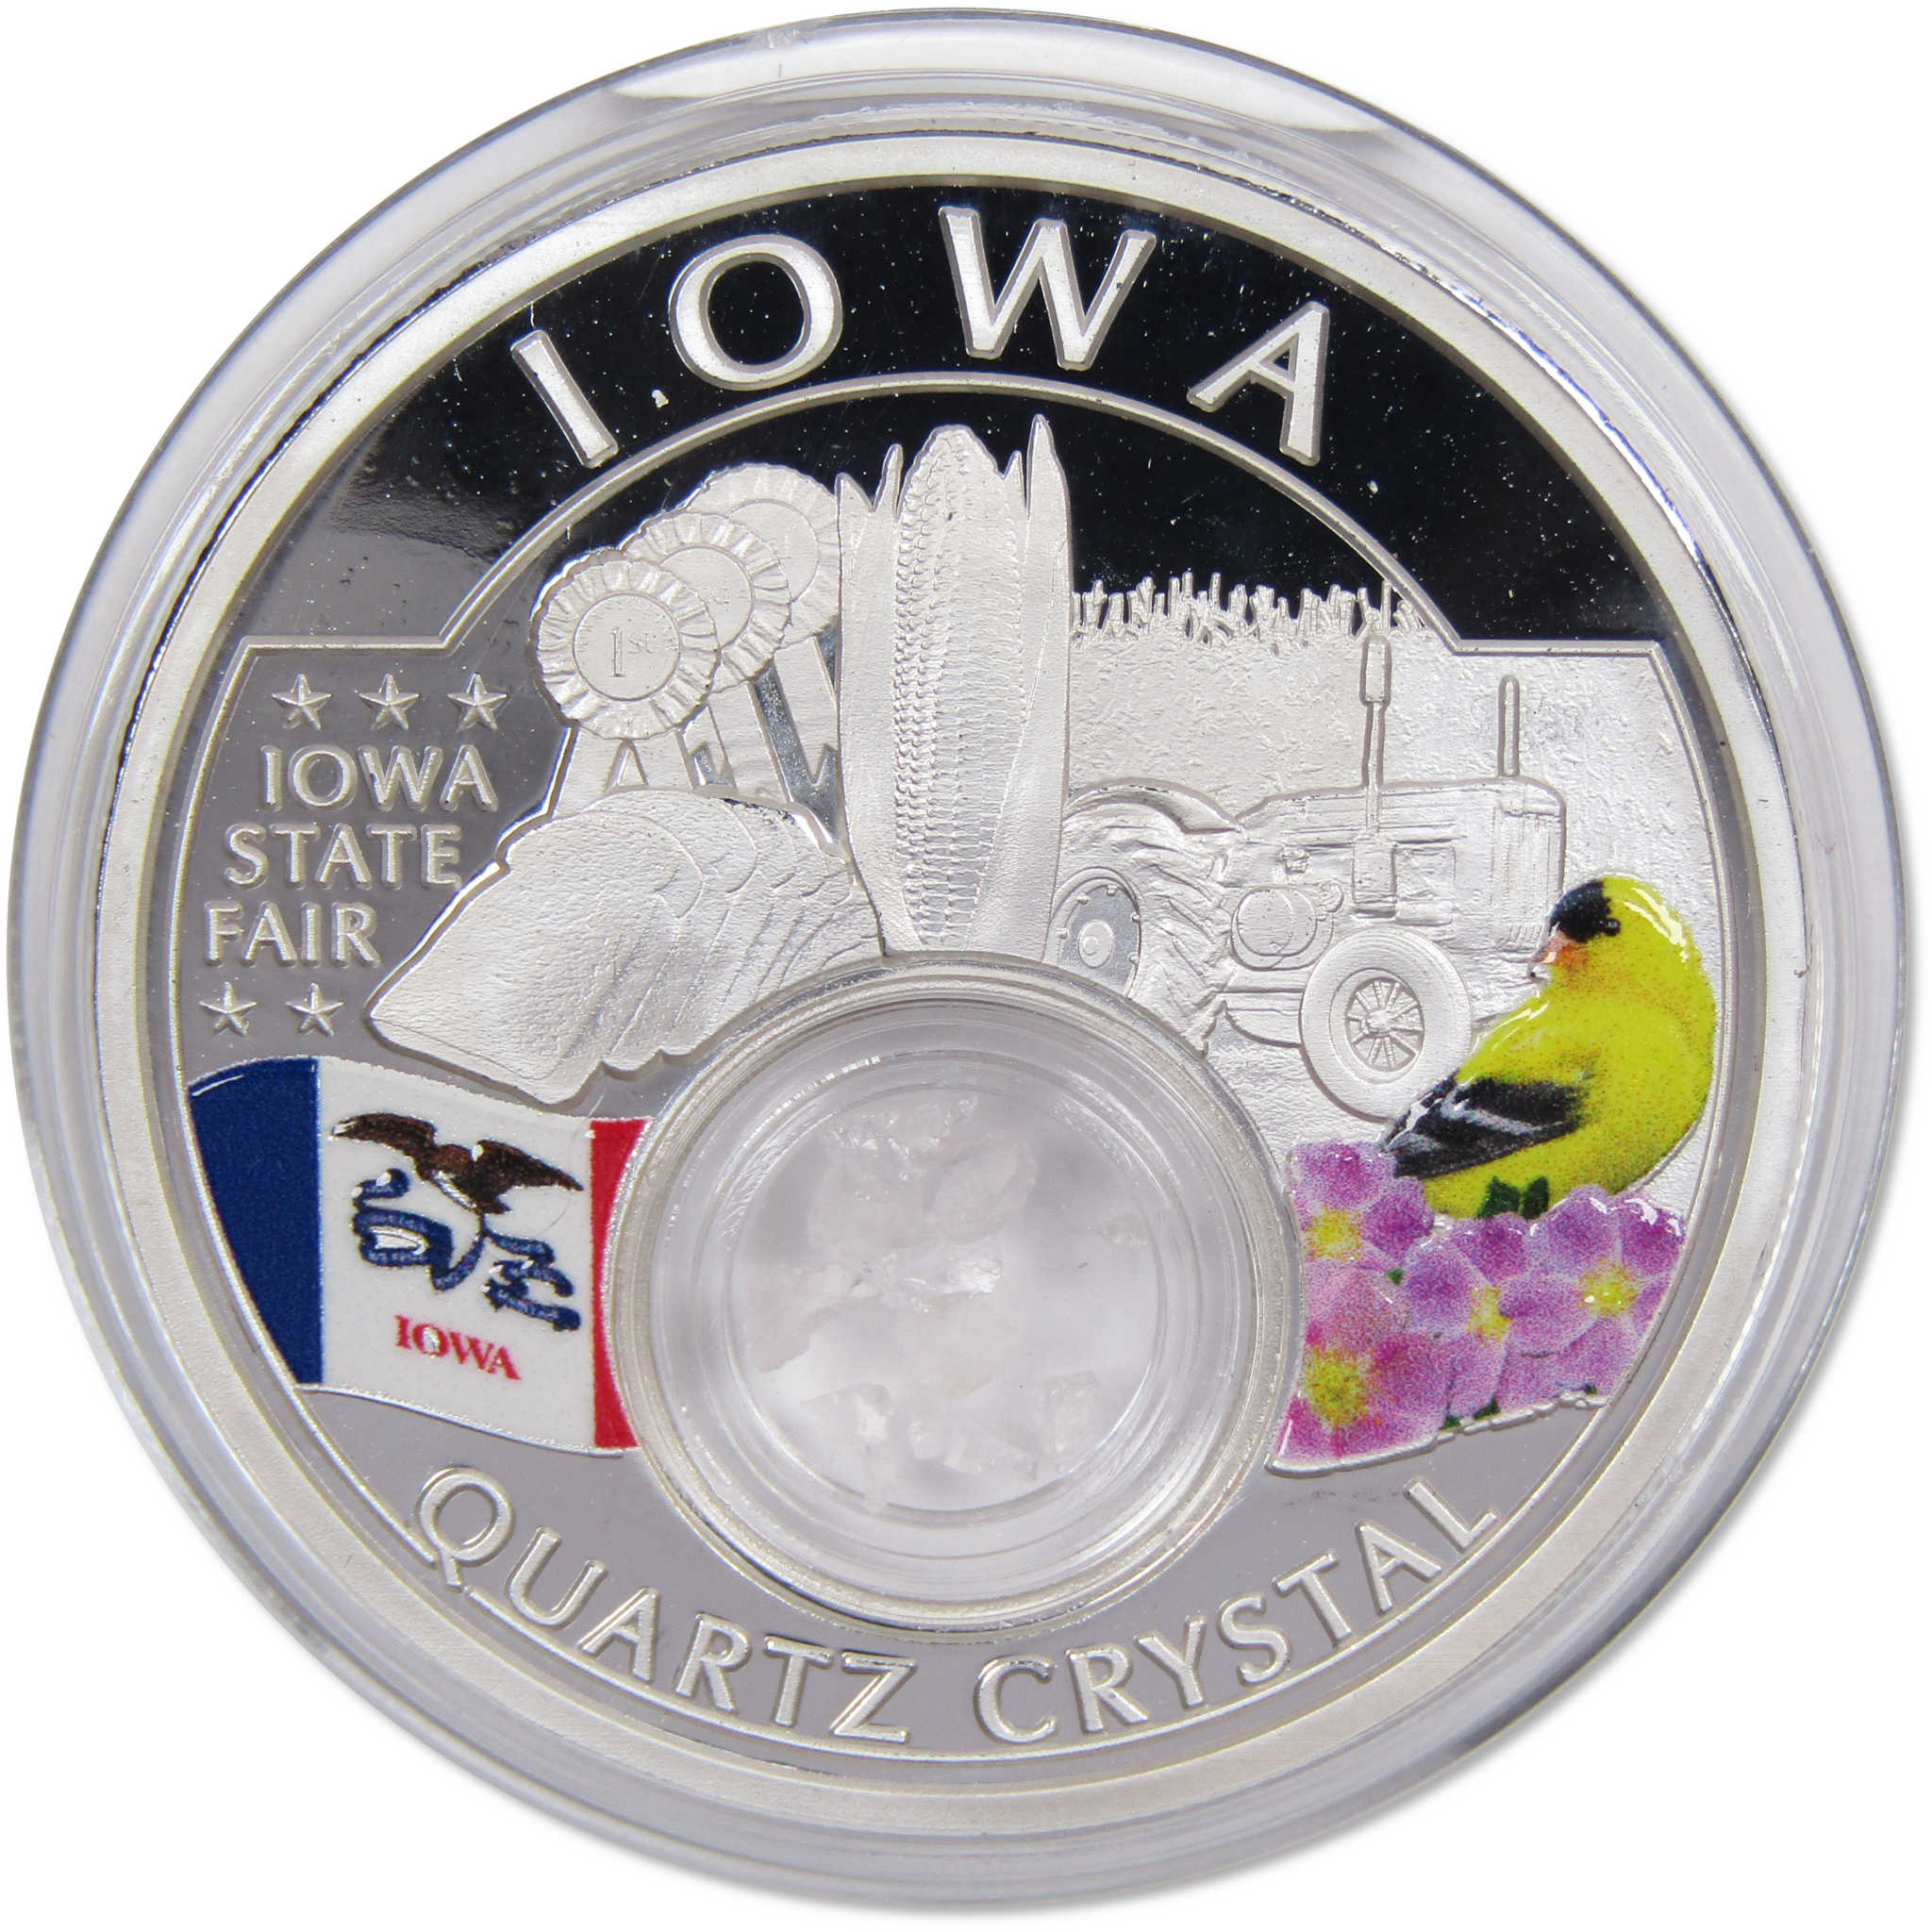 2021 Native American Mesa Grande Iowa Quartz Crystal 1 oz .999 Silver $10 Proof